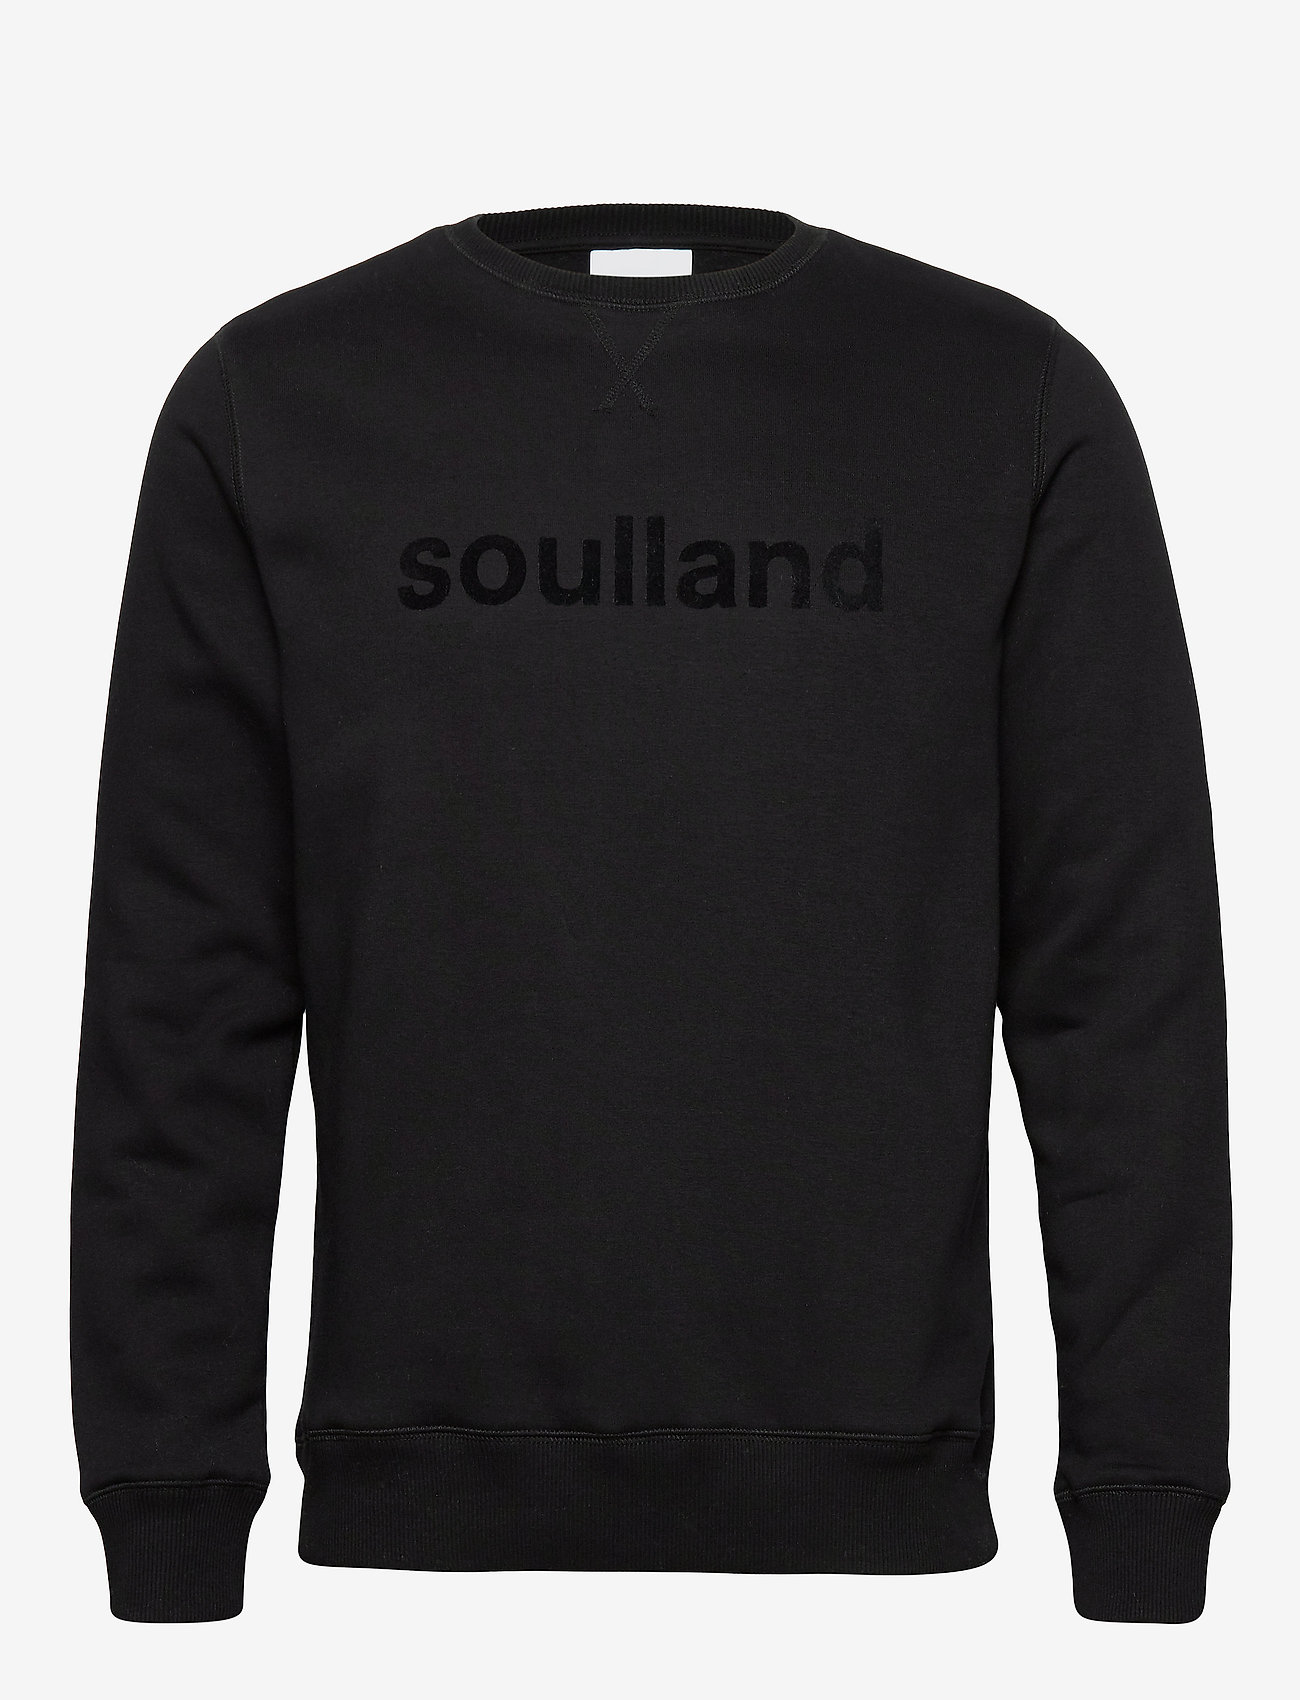 Soulland - Willie sweatshirt - bluzy z kapturem - black - 0